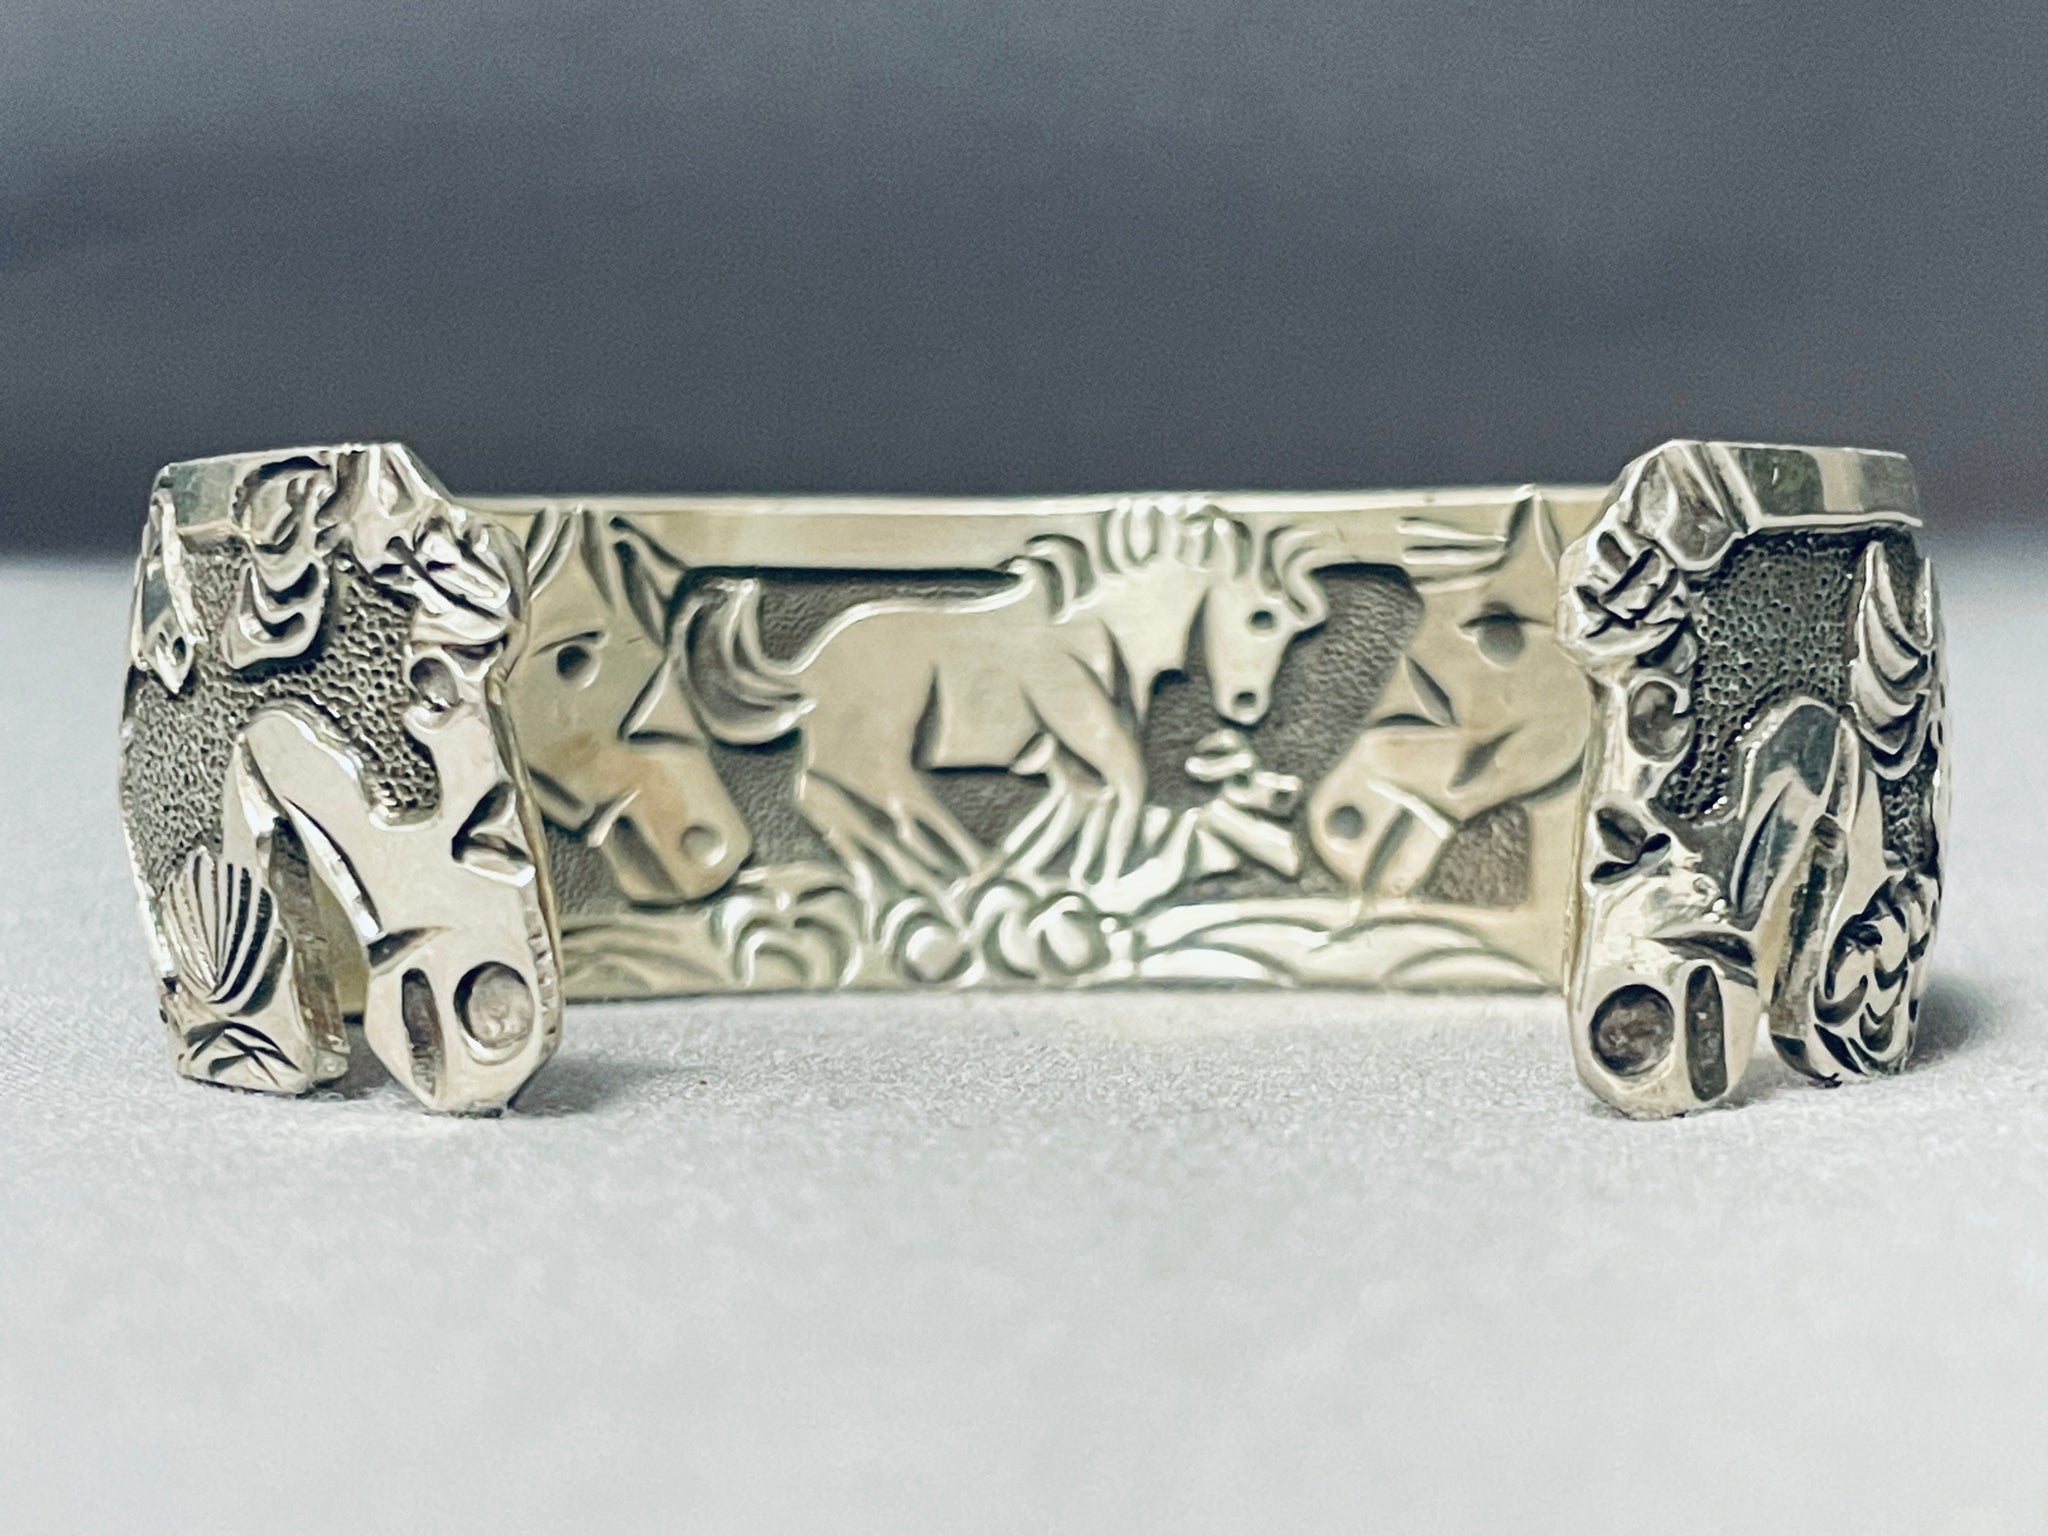 Gajredar Silver Bracelet, India - Michael Backman Ltd